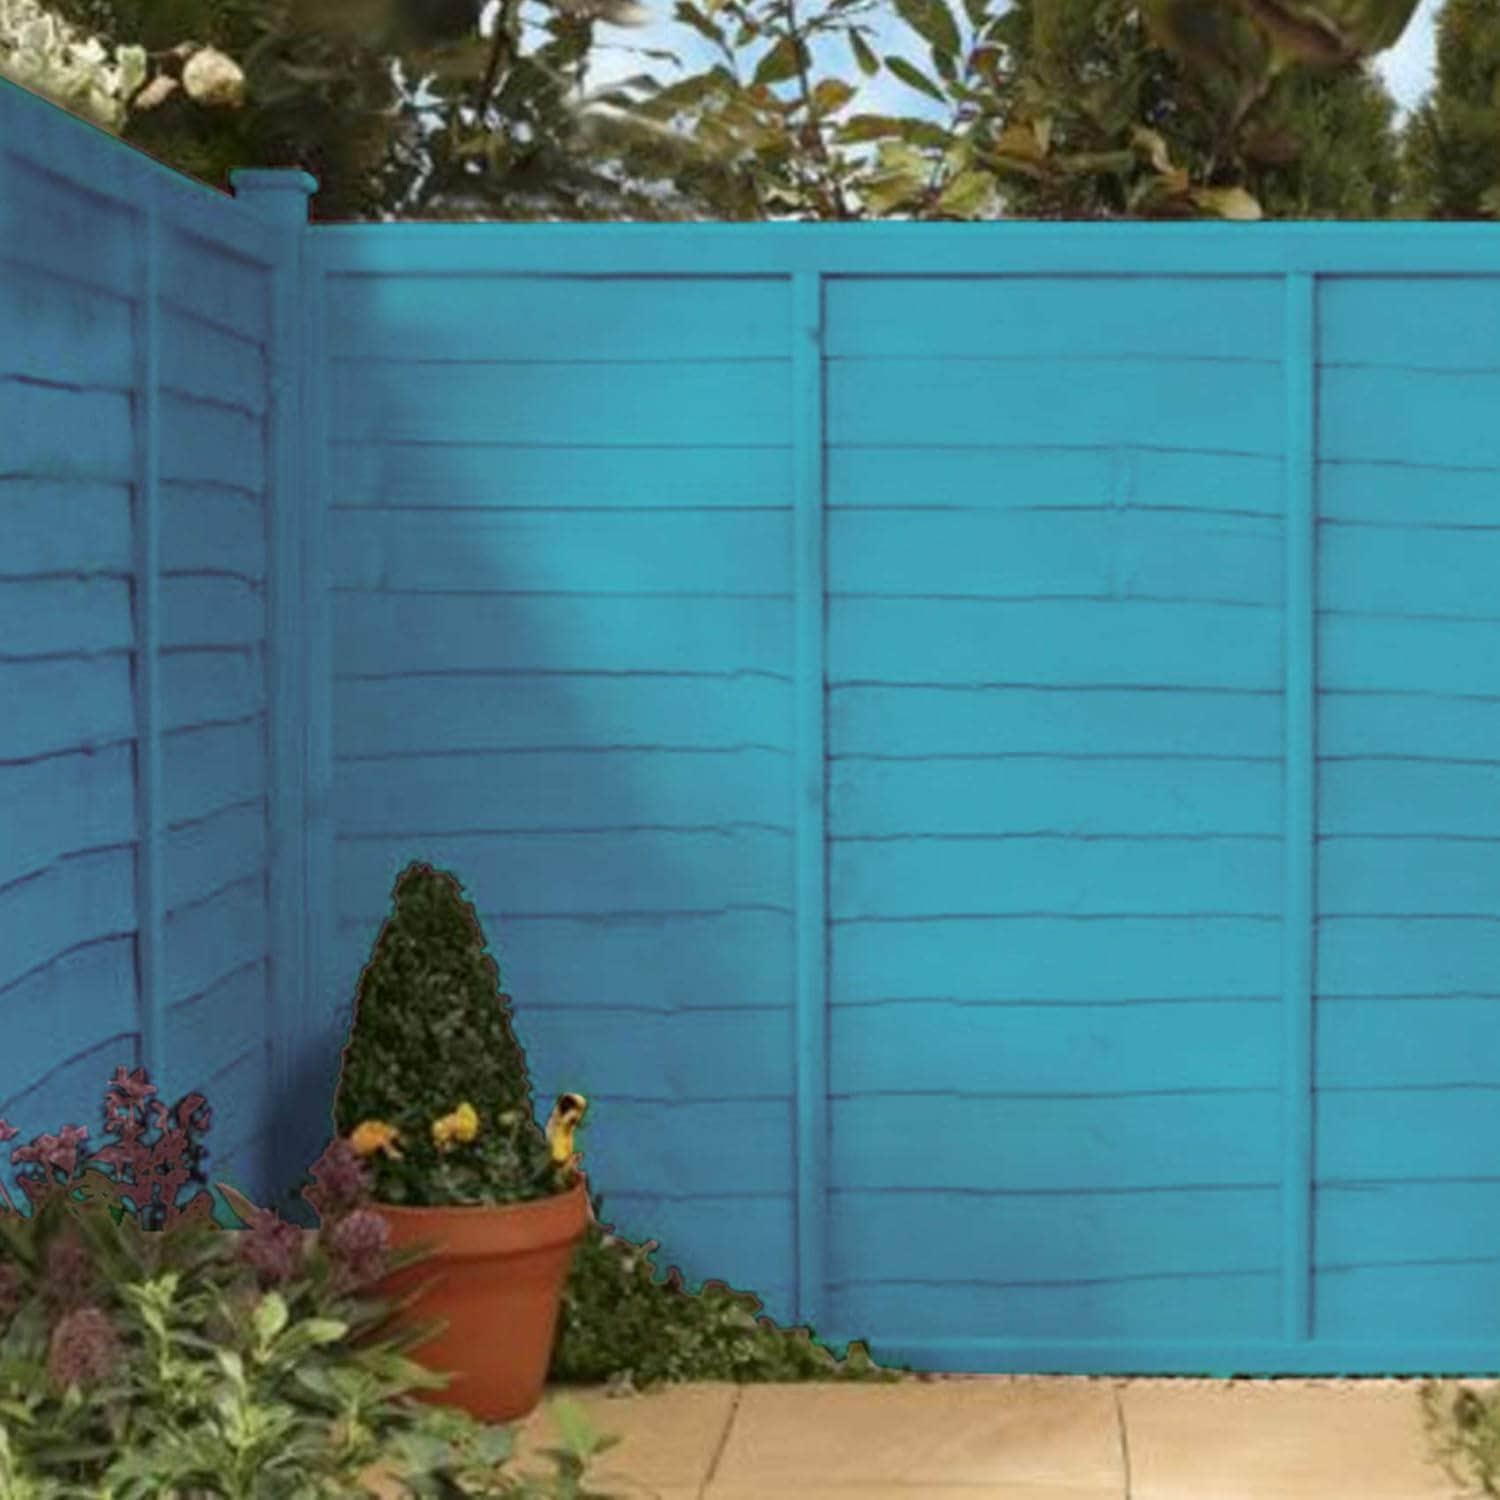 Paint  -  Cuprinol Garden Shades 1L - Beach Blue  -  50149524